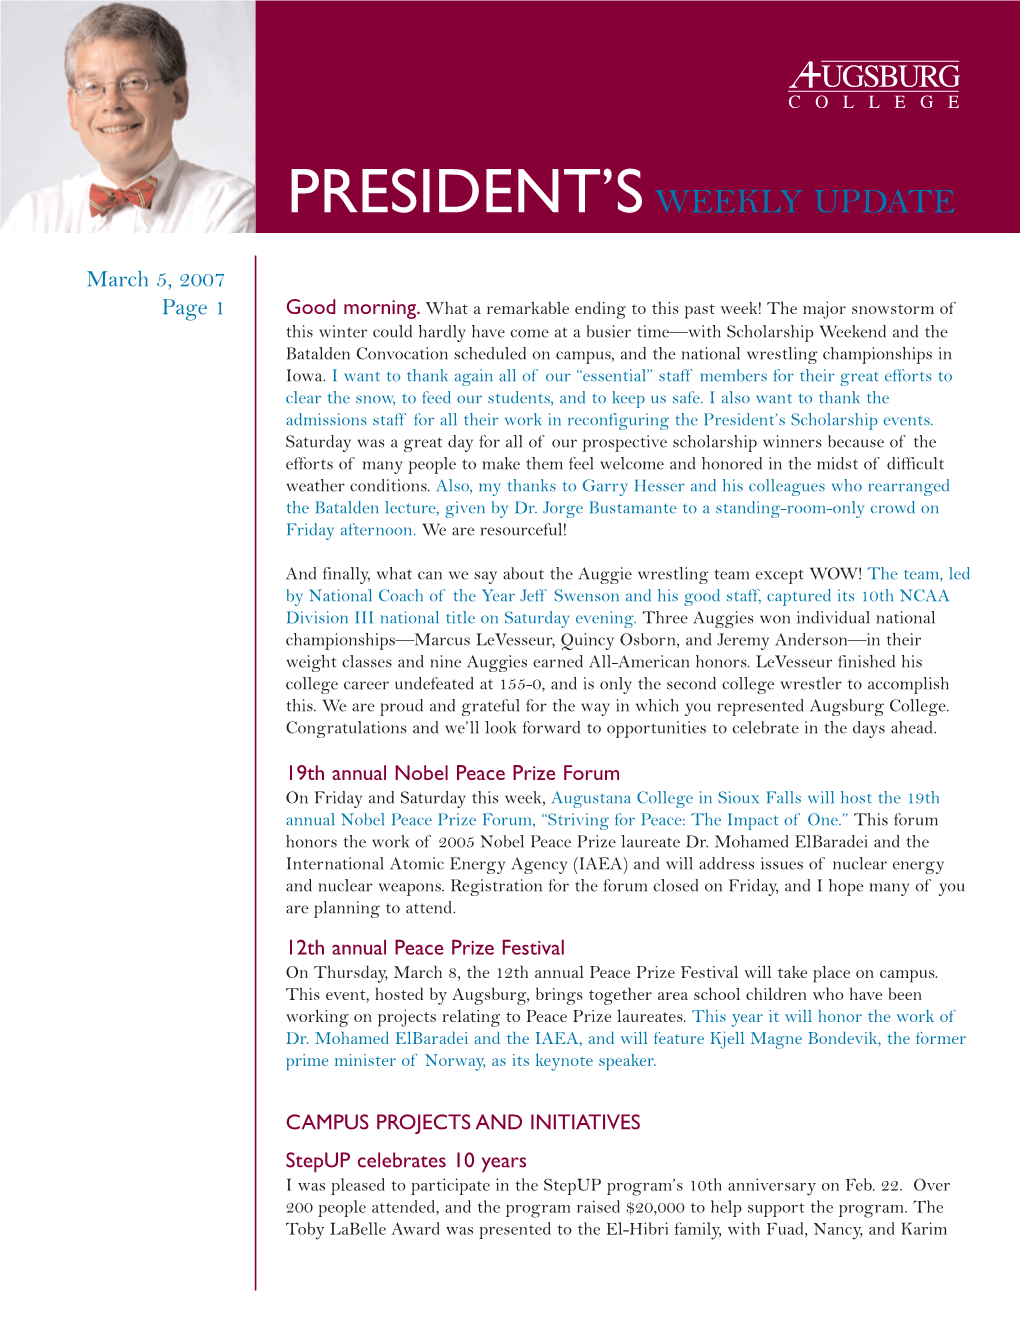 President'sweekly Update